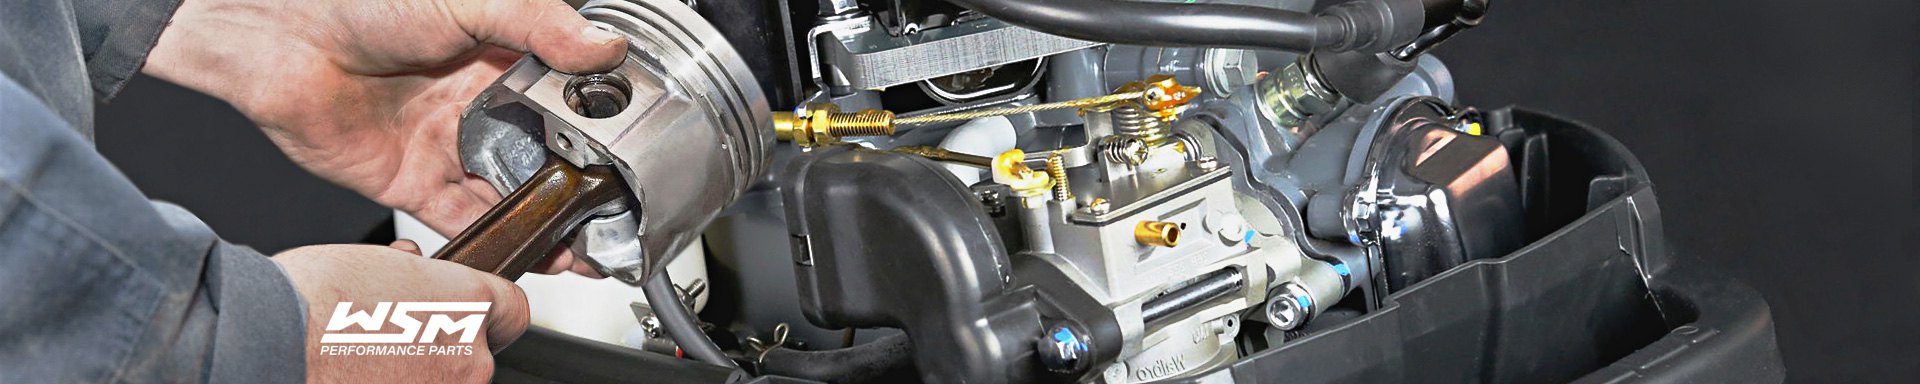 WSM Internal Engine Parts